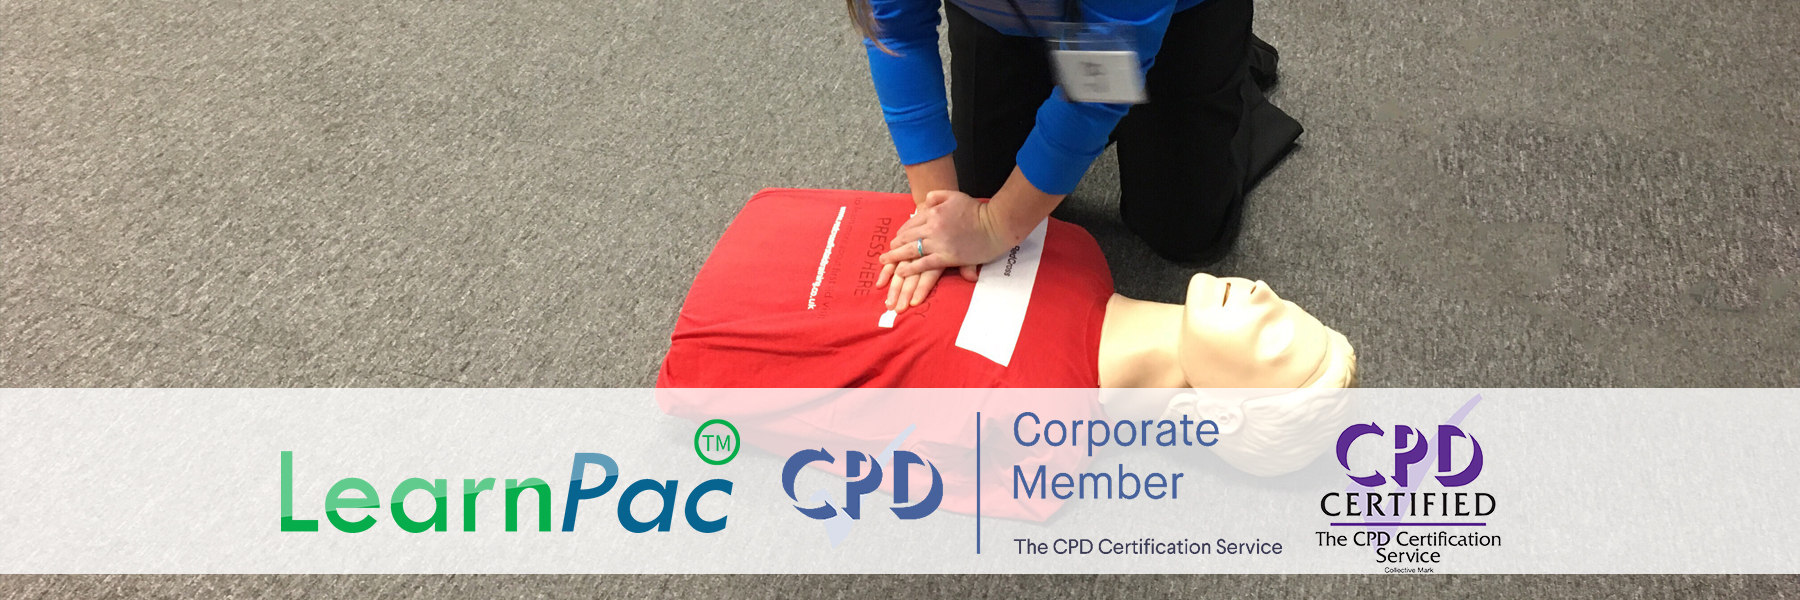 Cardiopulmonary Resuscitation - E-Learning Courses - LearnPac Systems UK -